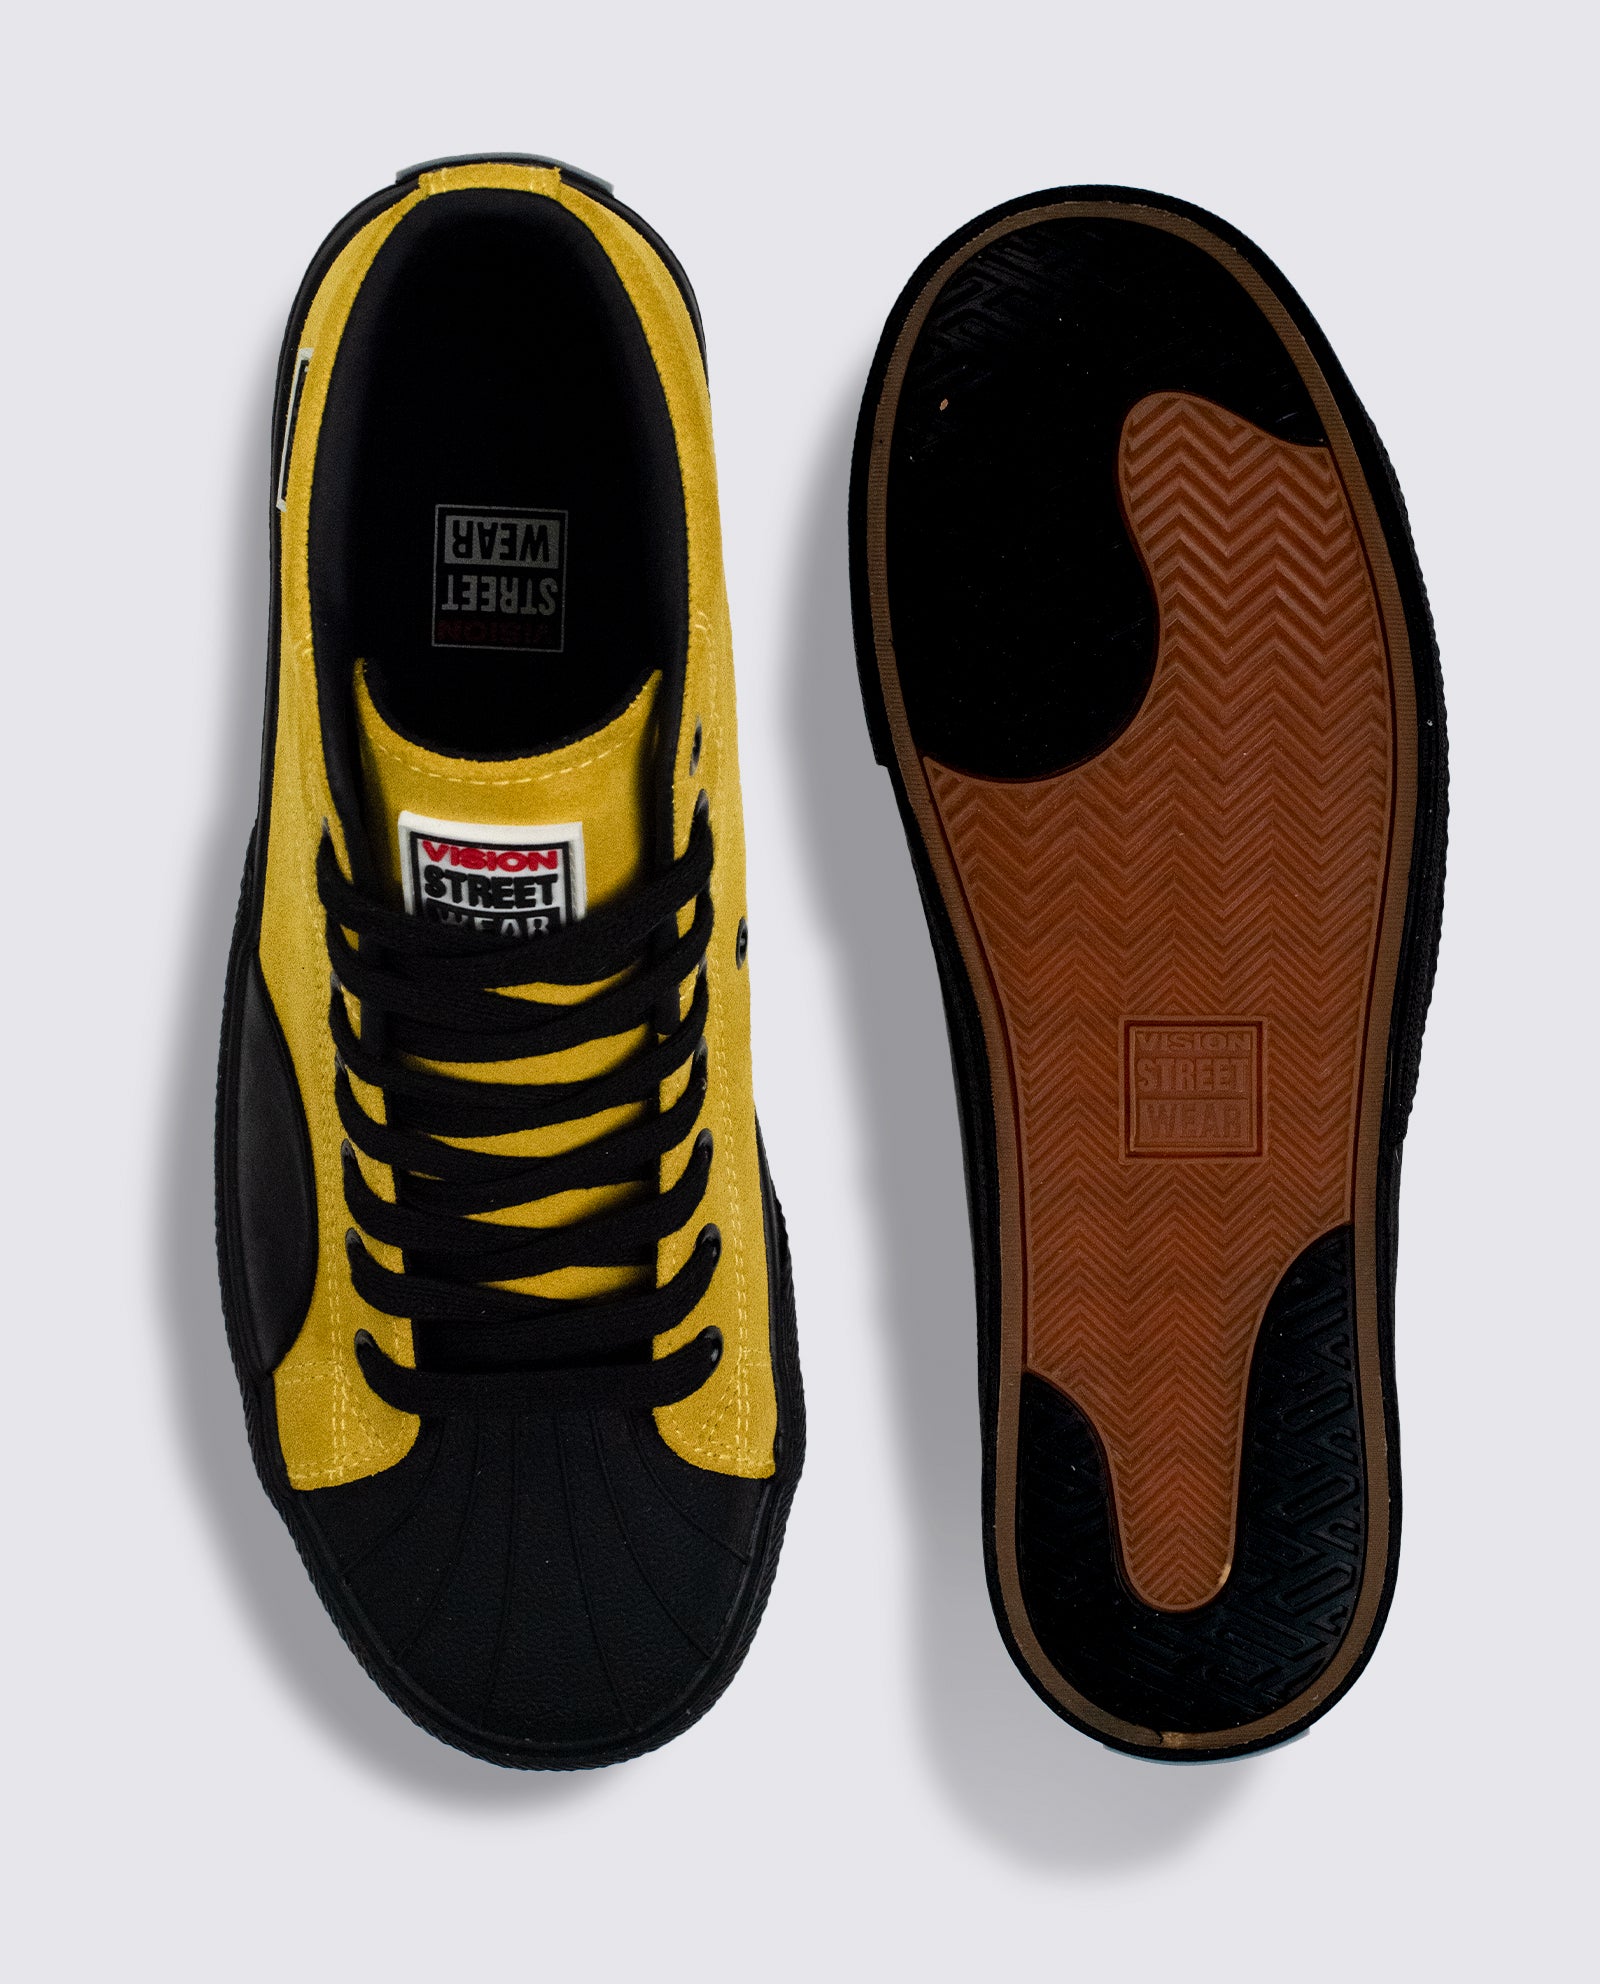 Vision Street Wear Leather Suede High Top Skateboard Sneakers Mustard